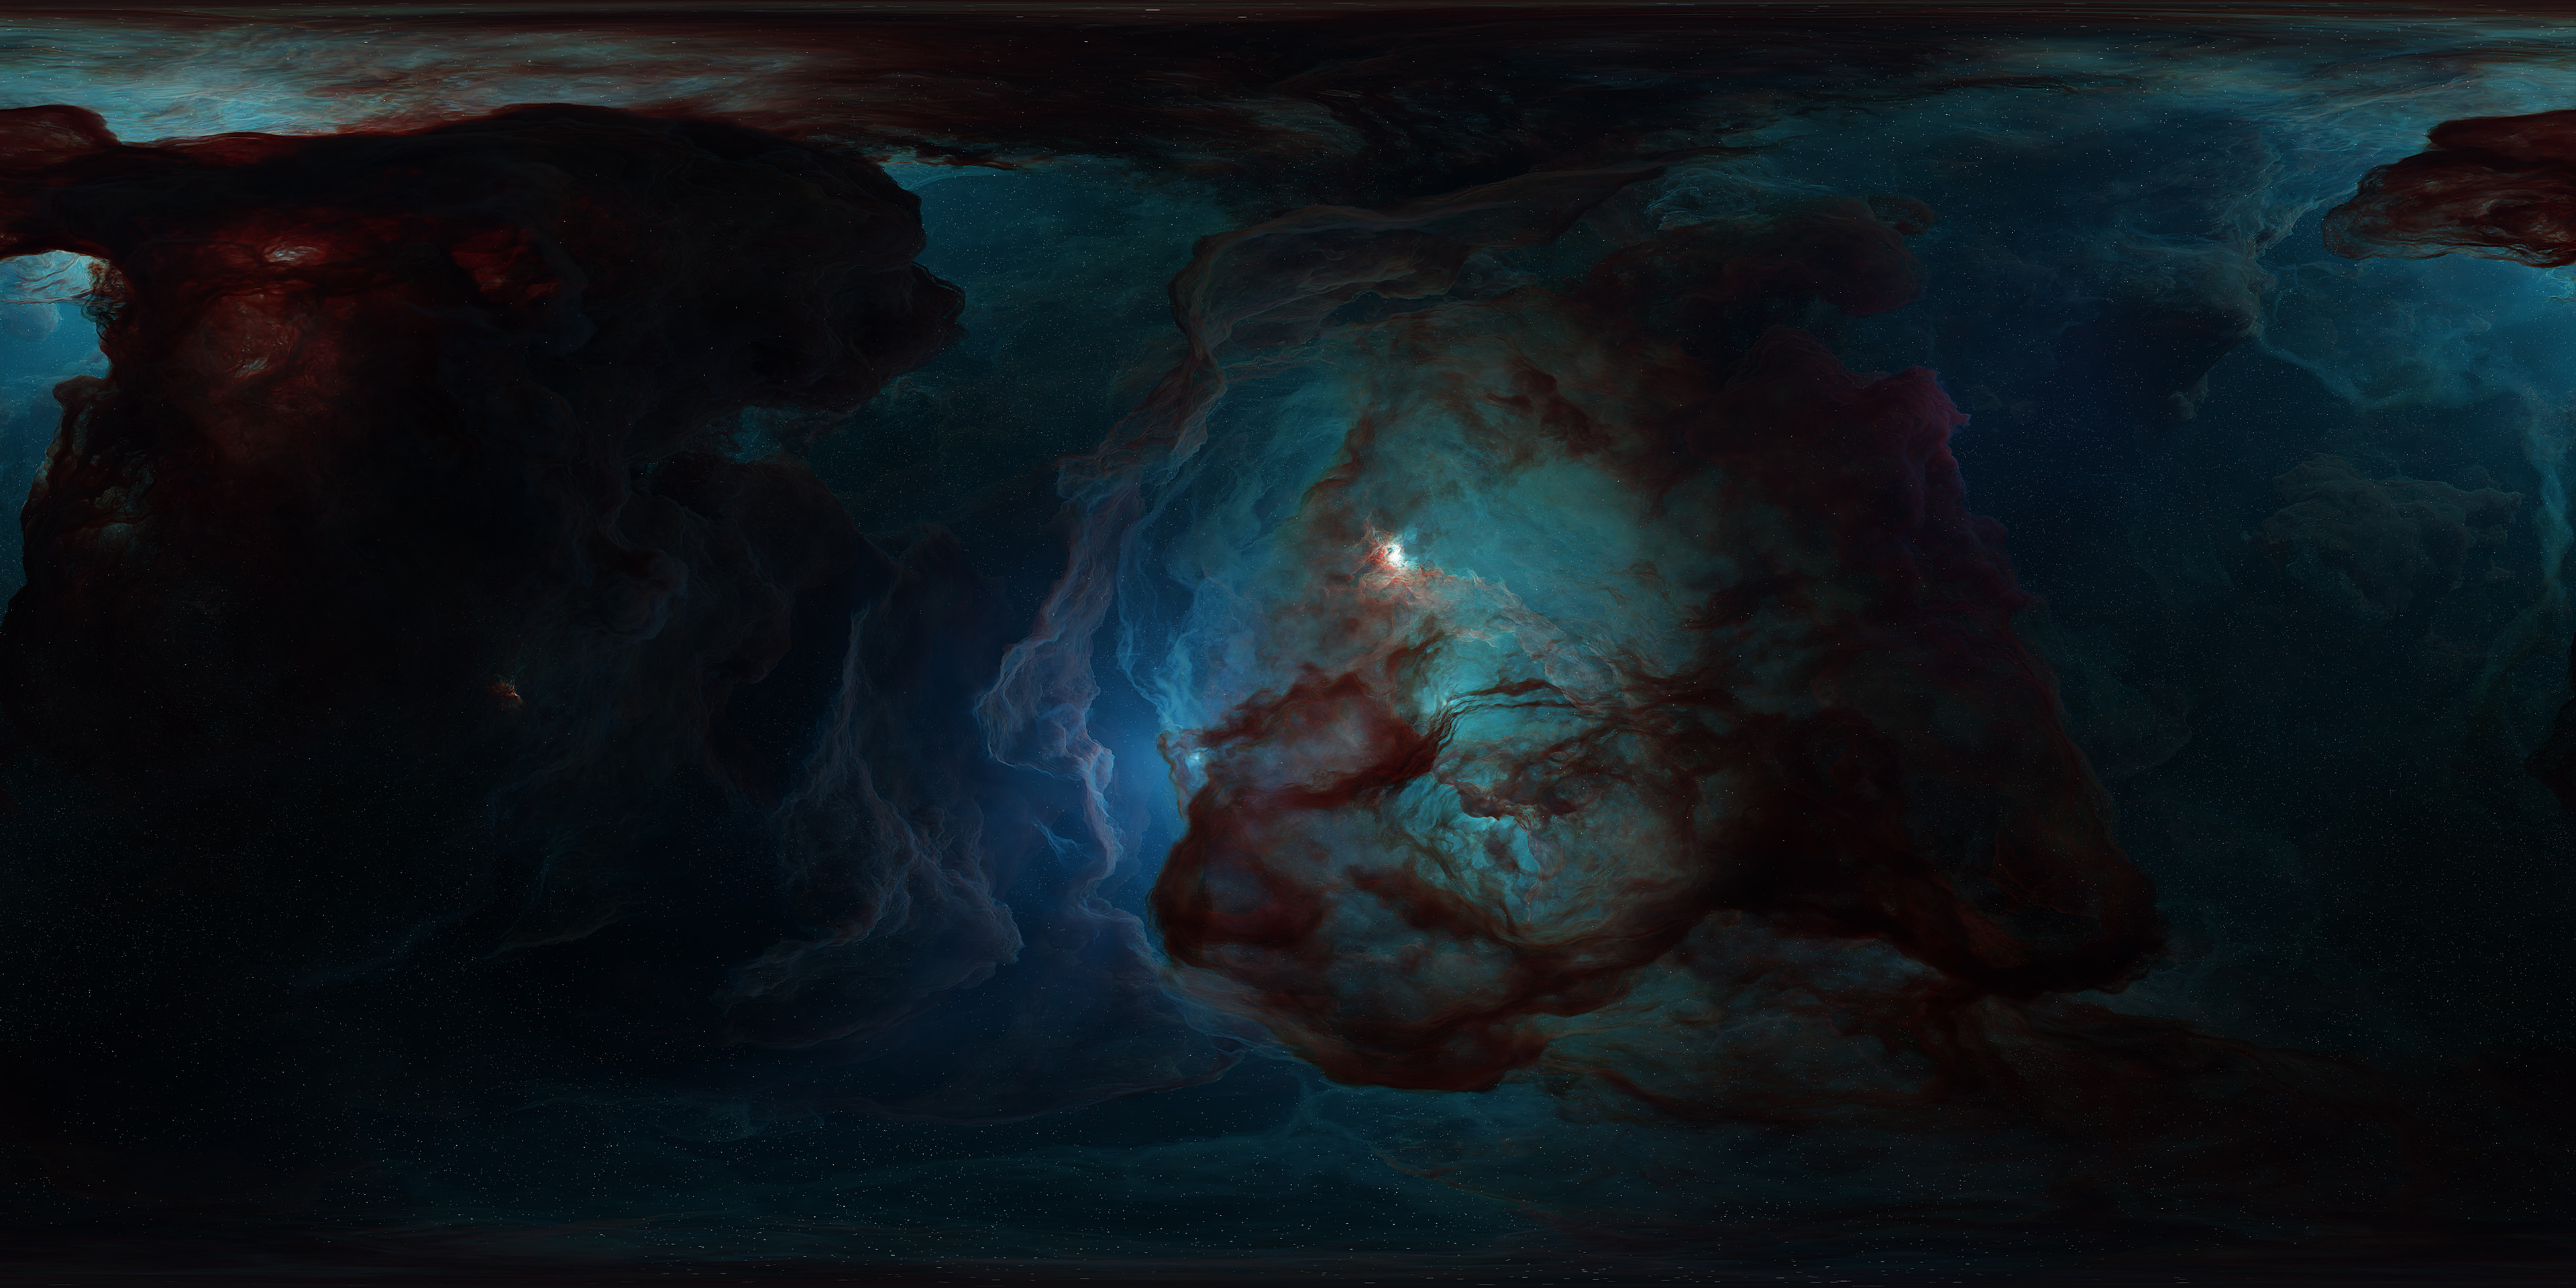 ArtStation Digital Art Tim Barton Space Nebula 3840x1920